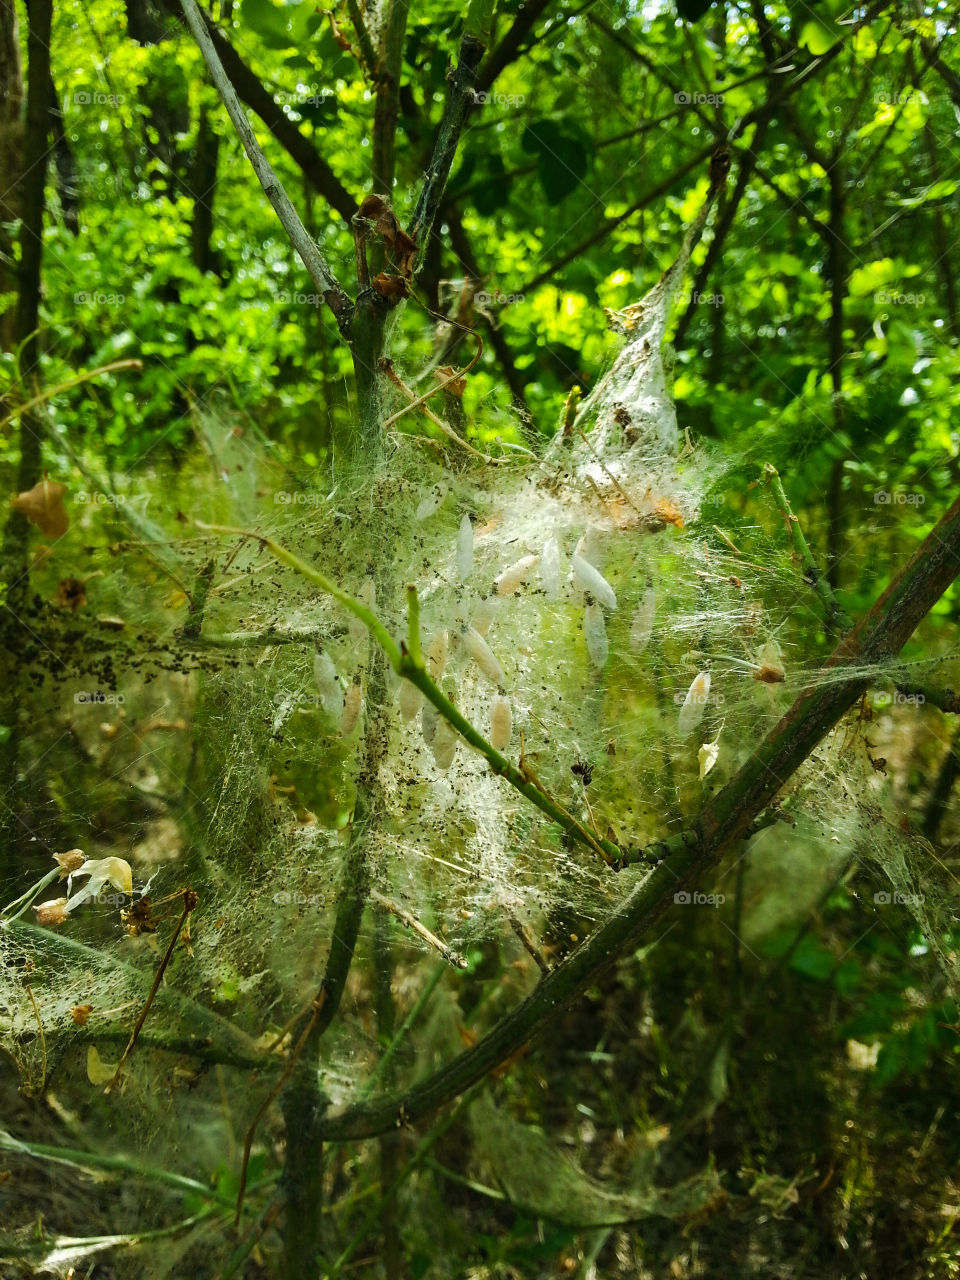 Spider larvae on the web